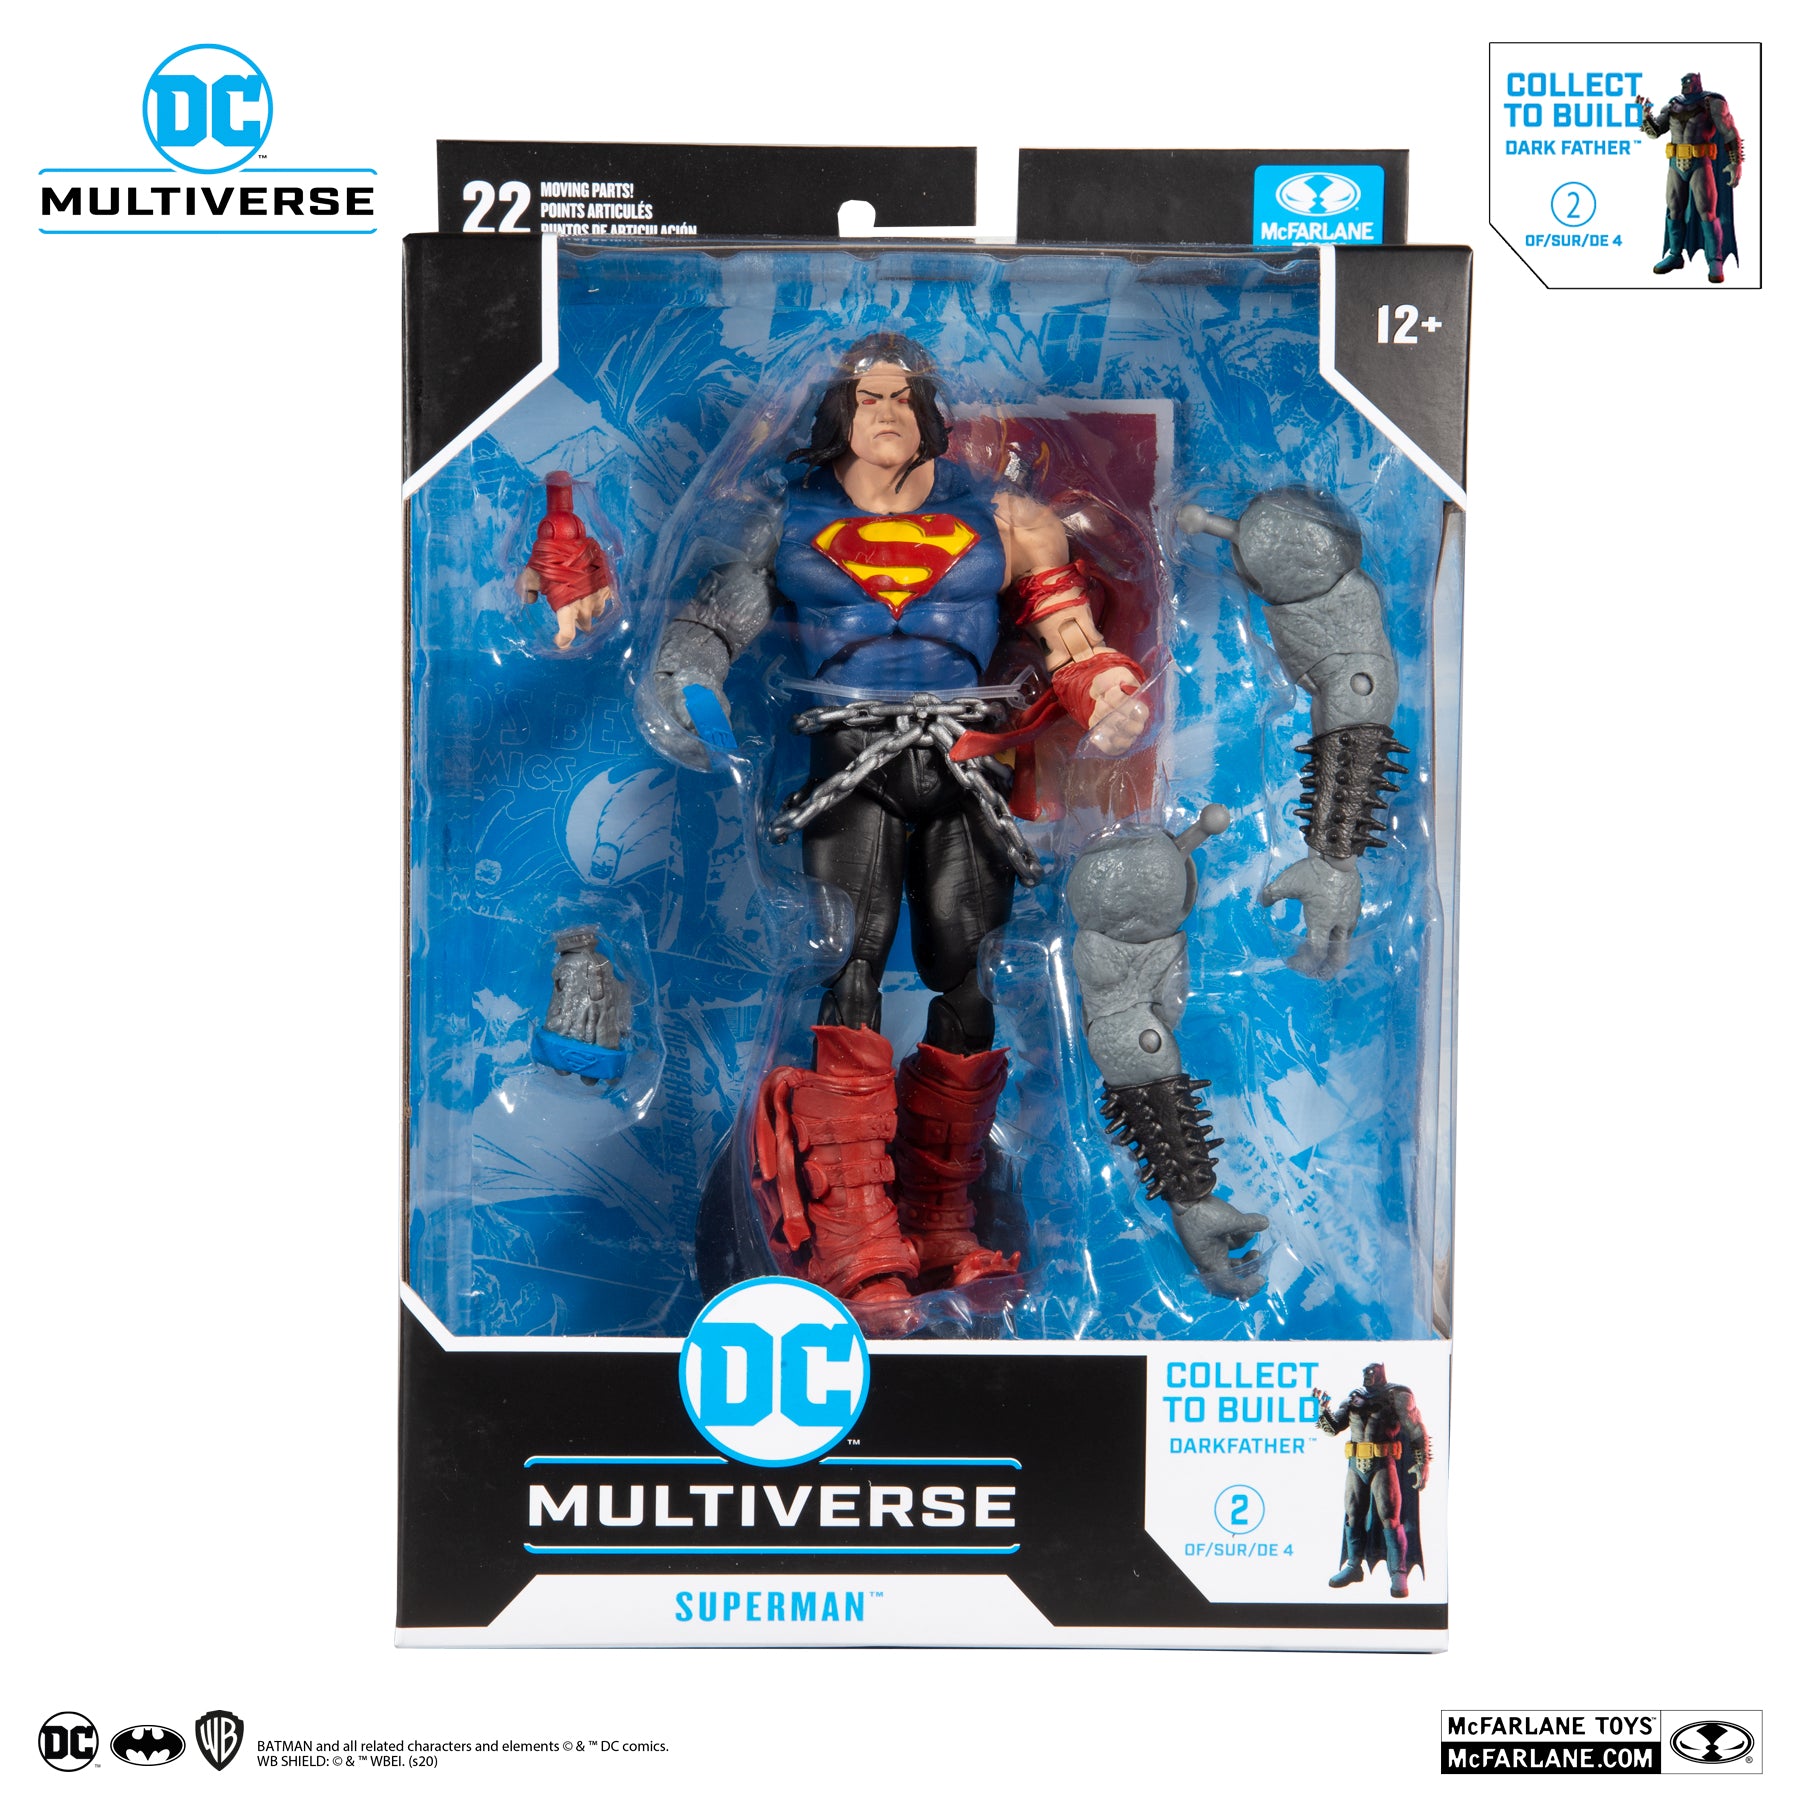 DC Multiverse Death Metal Superman Build-a Darkfather - McFarlane Toys